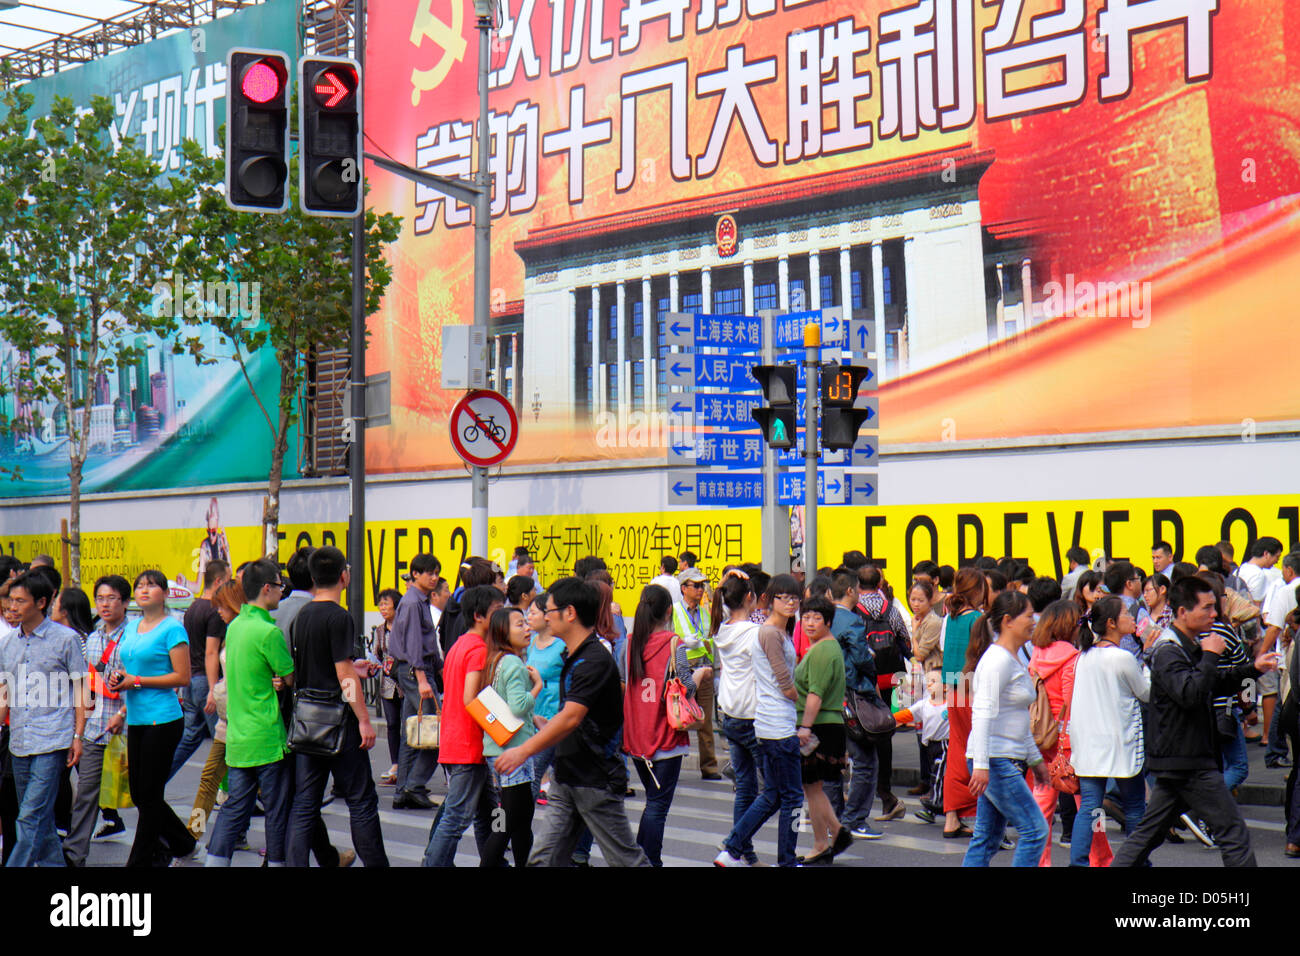 Shanghai China,Chinese Huangpu District,East Nanjing Road,National Day Golden Week,Asian man men male,woman female women,Chinese Mandarin symbols,hanz Stock Photo